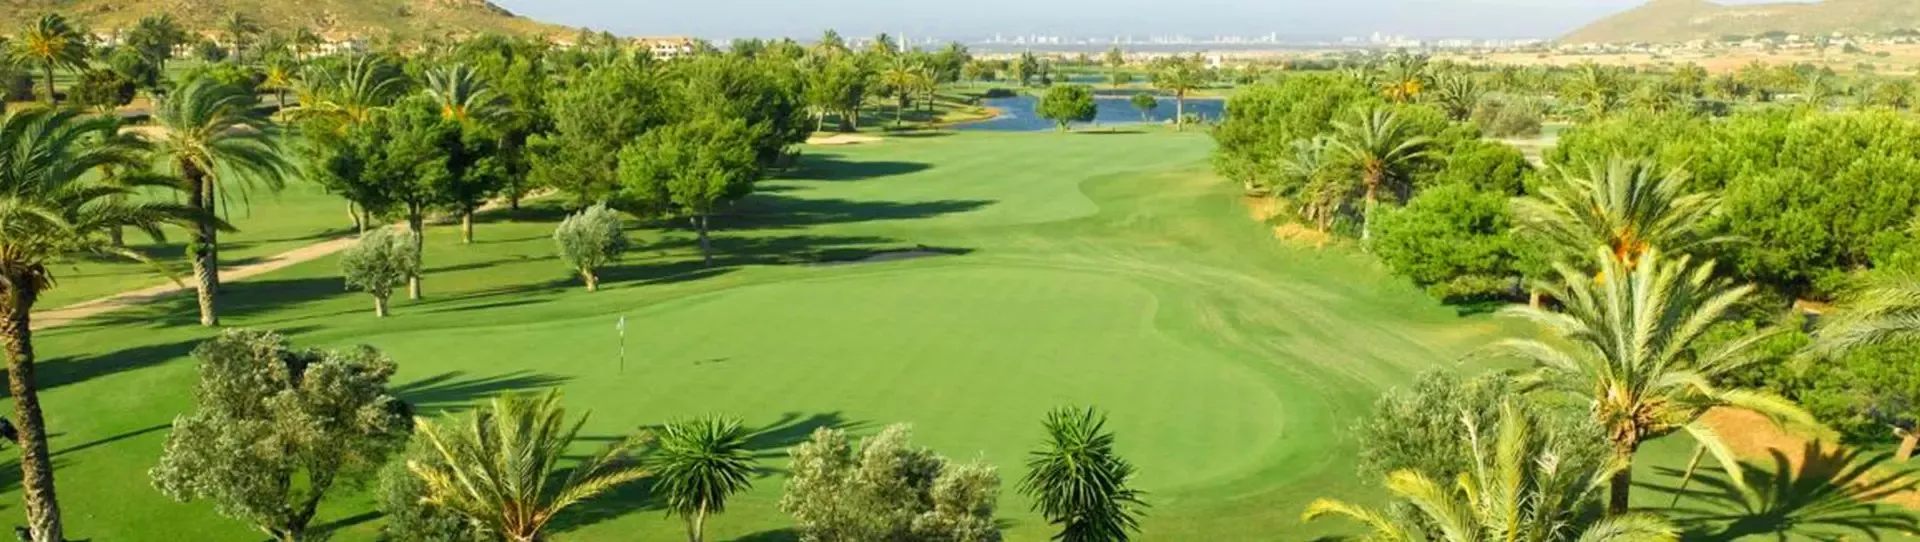 Spain golf courses - La Manga Club Resort North - Photo 1